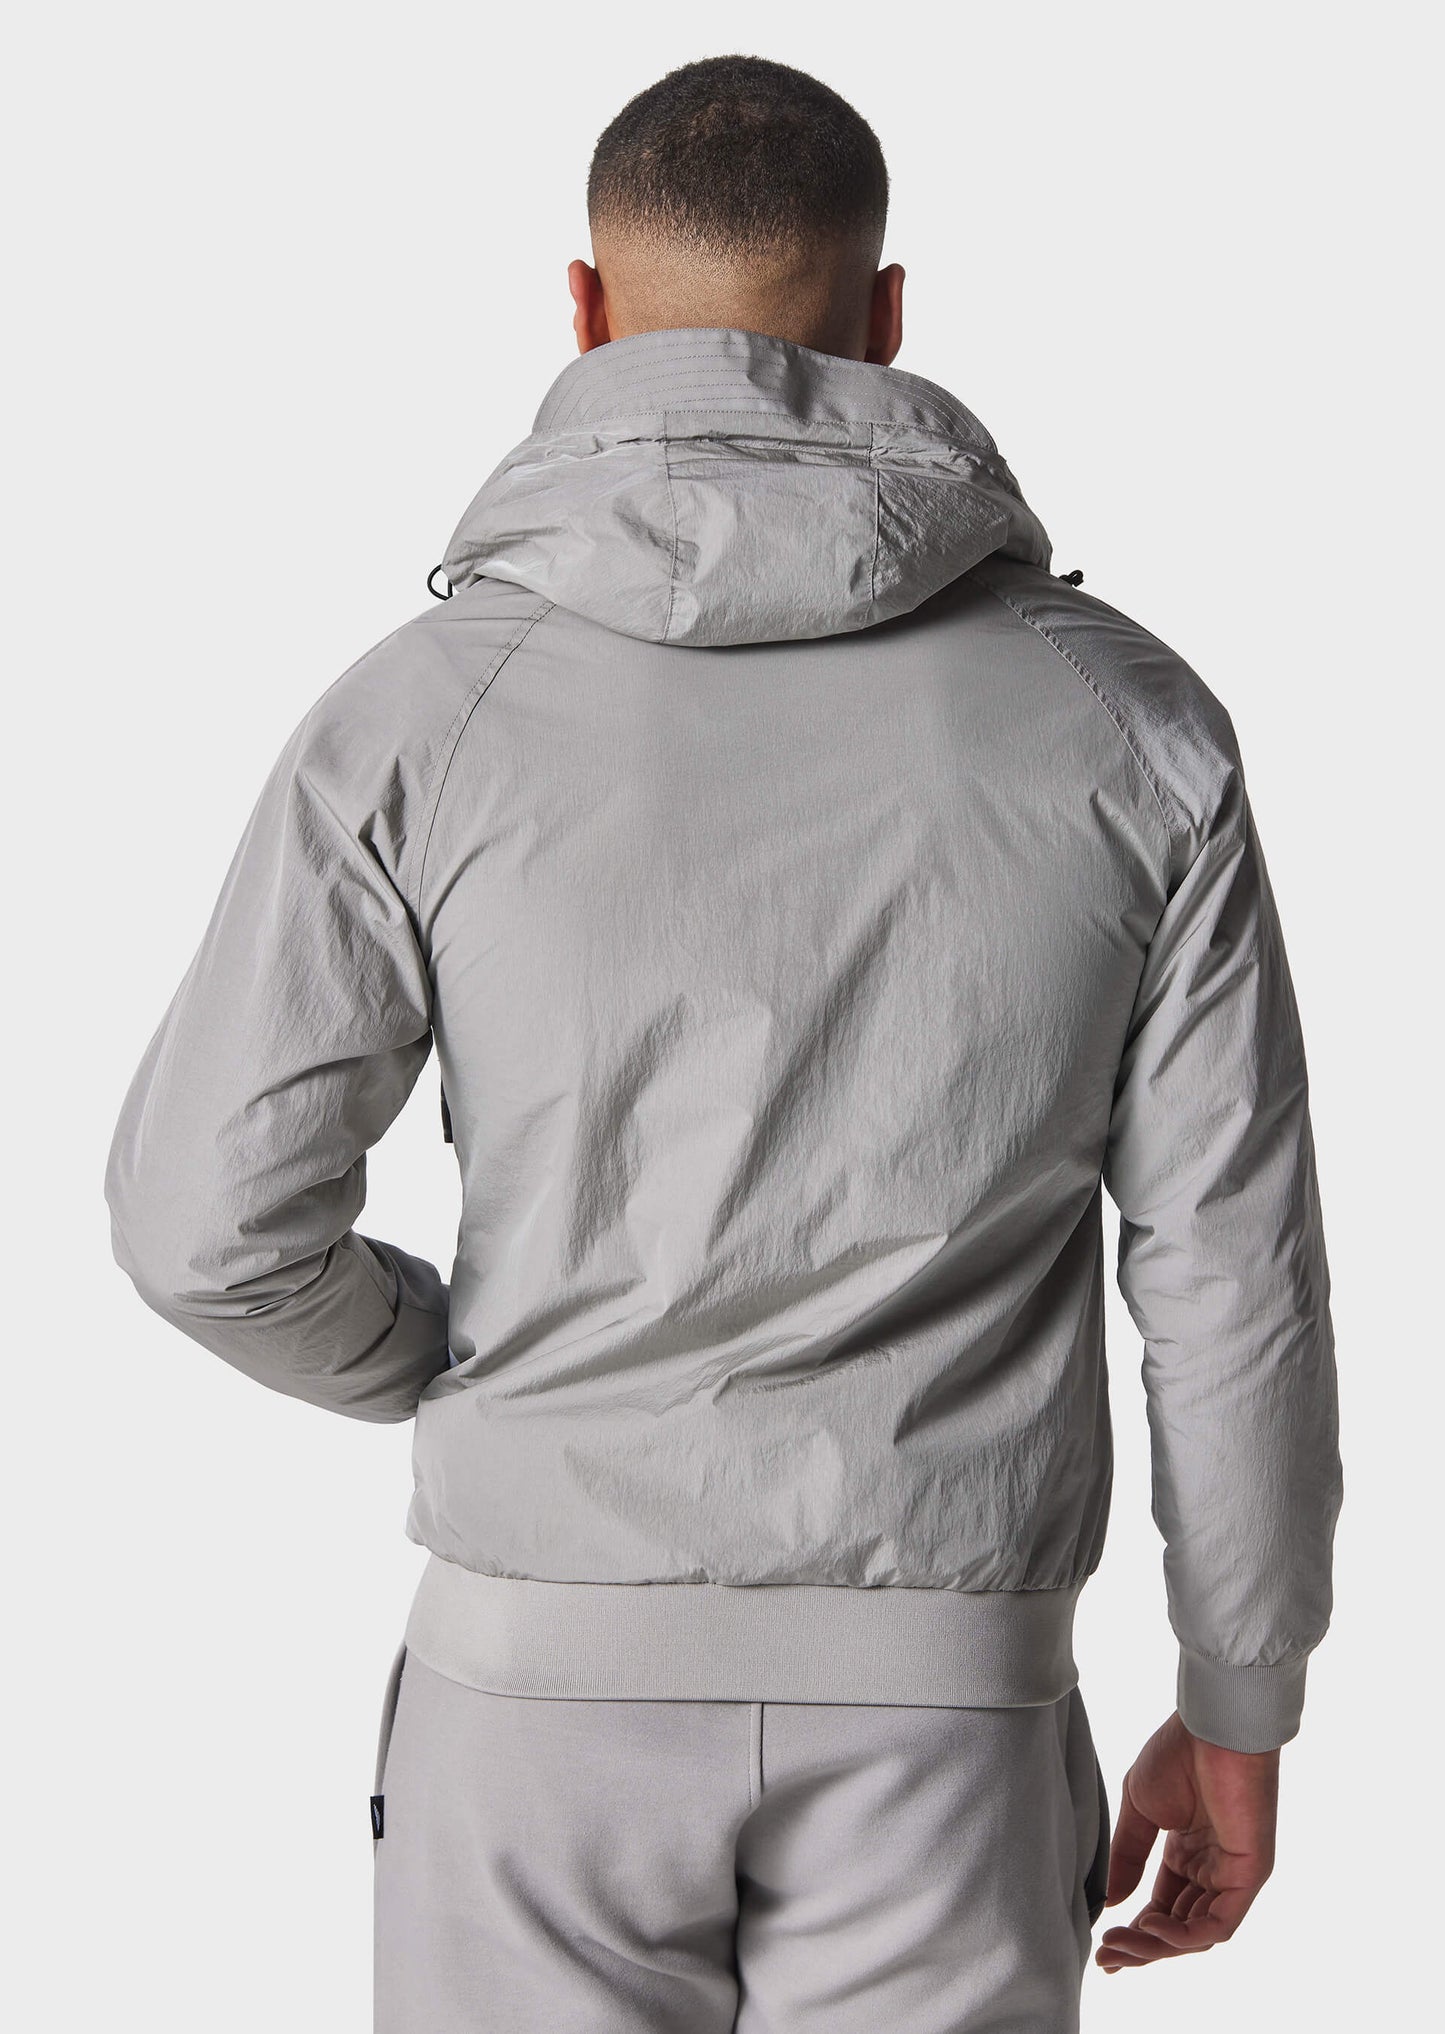 Mattrel Grey Jacket